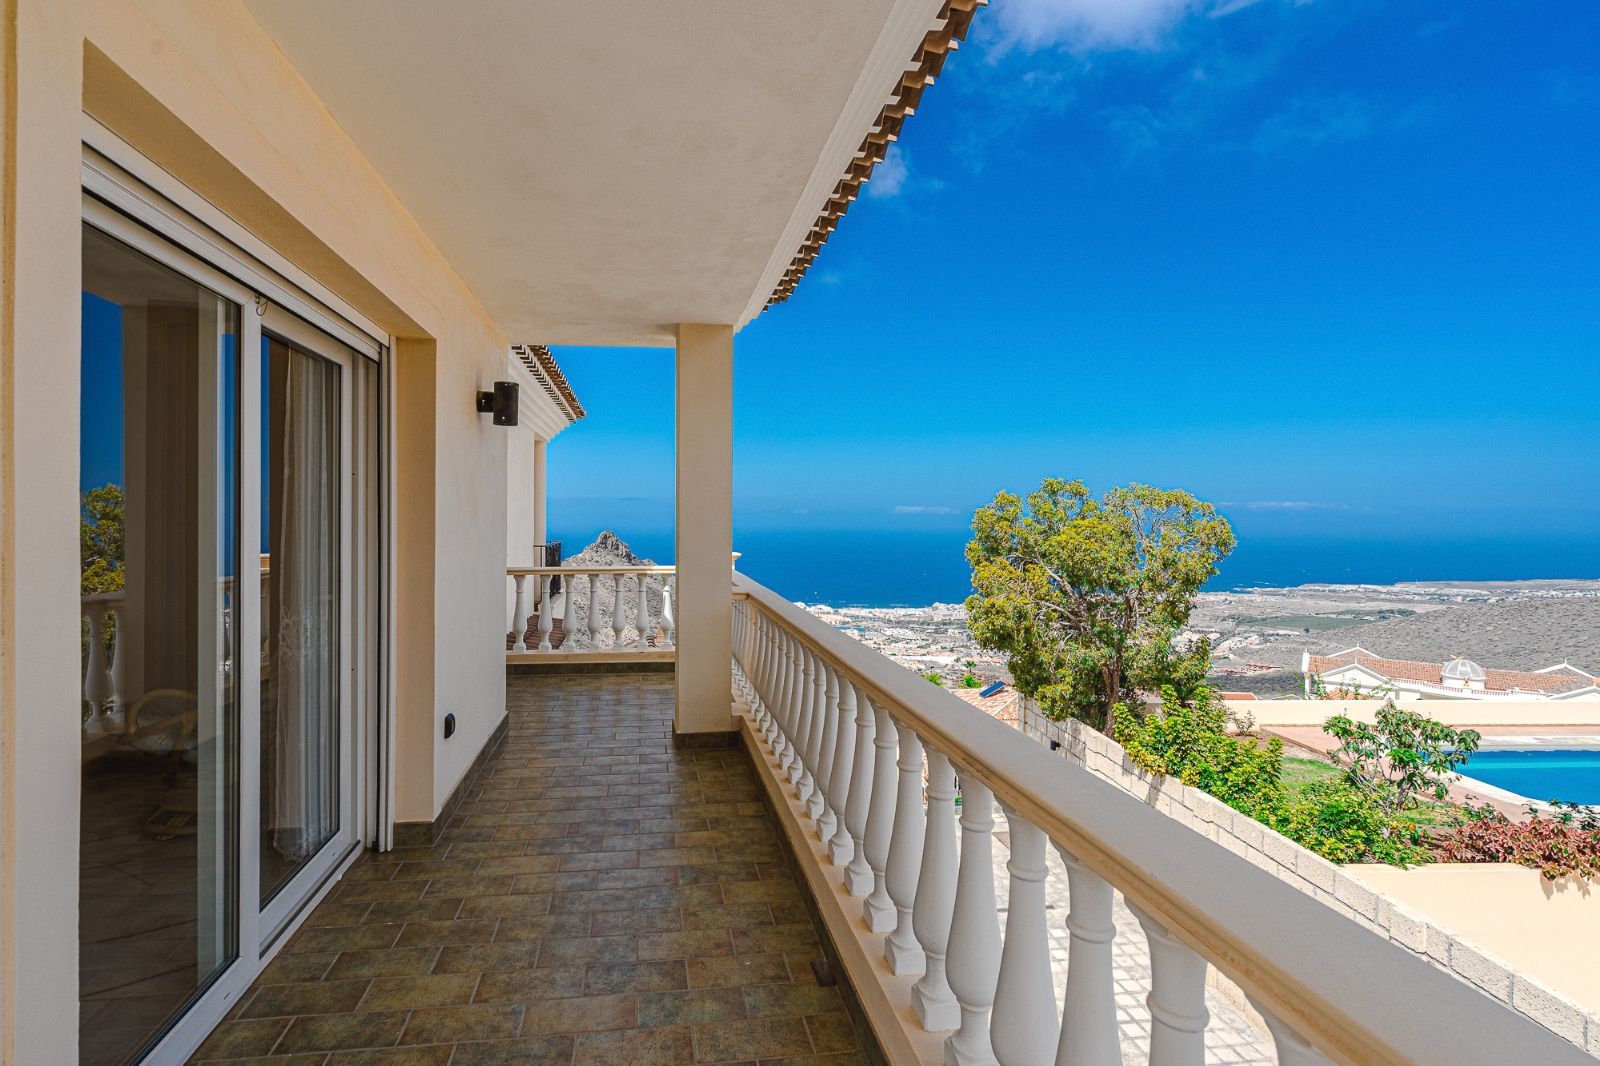 Villa for sale in Tenerife 46